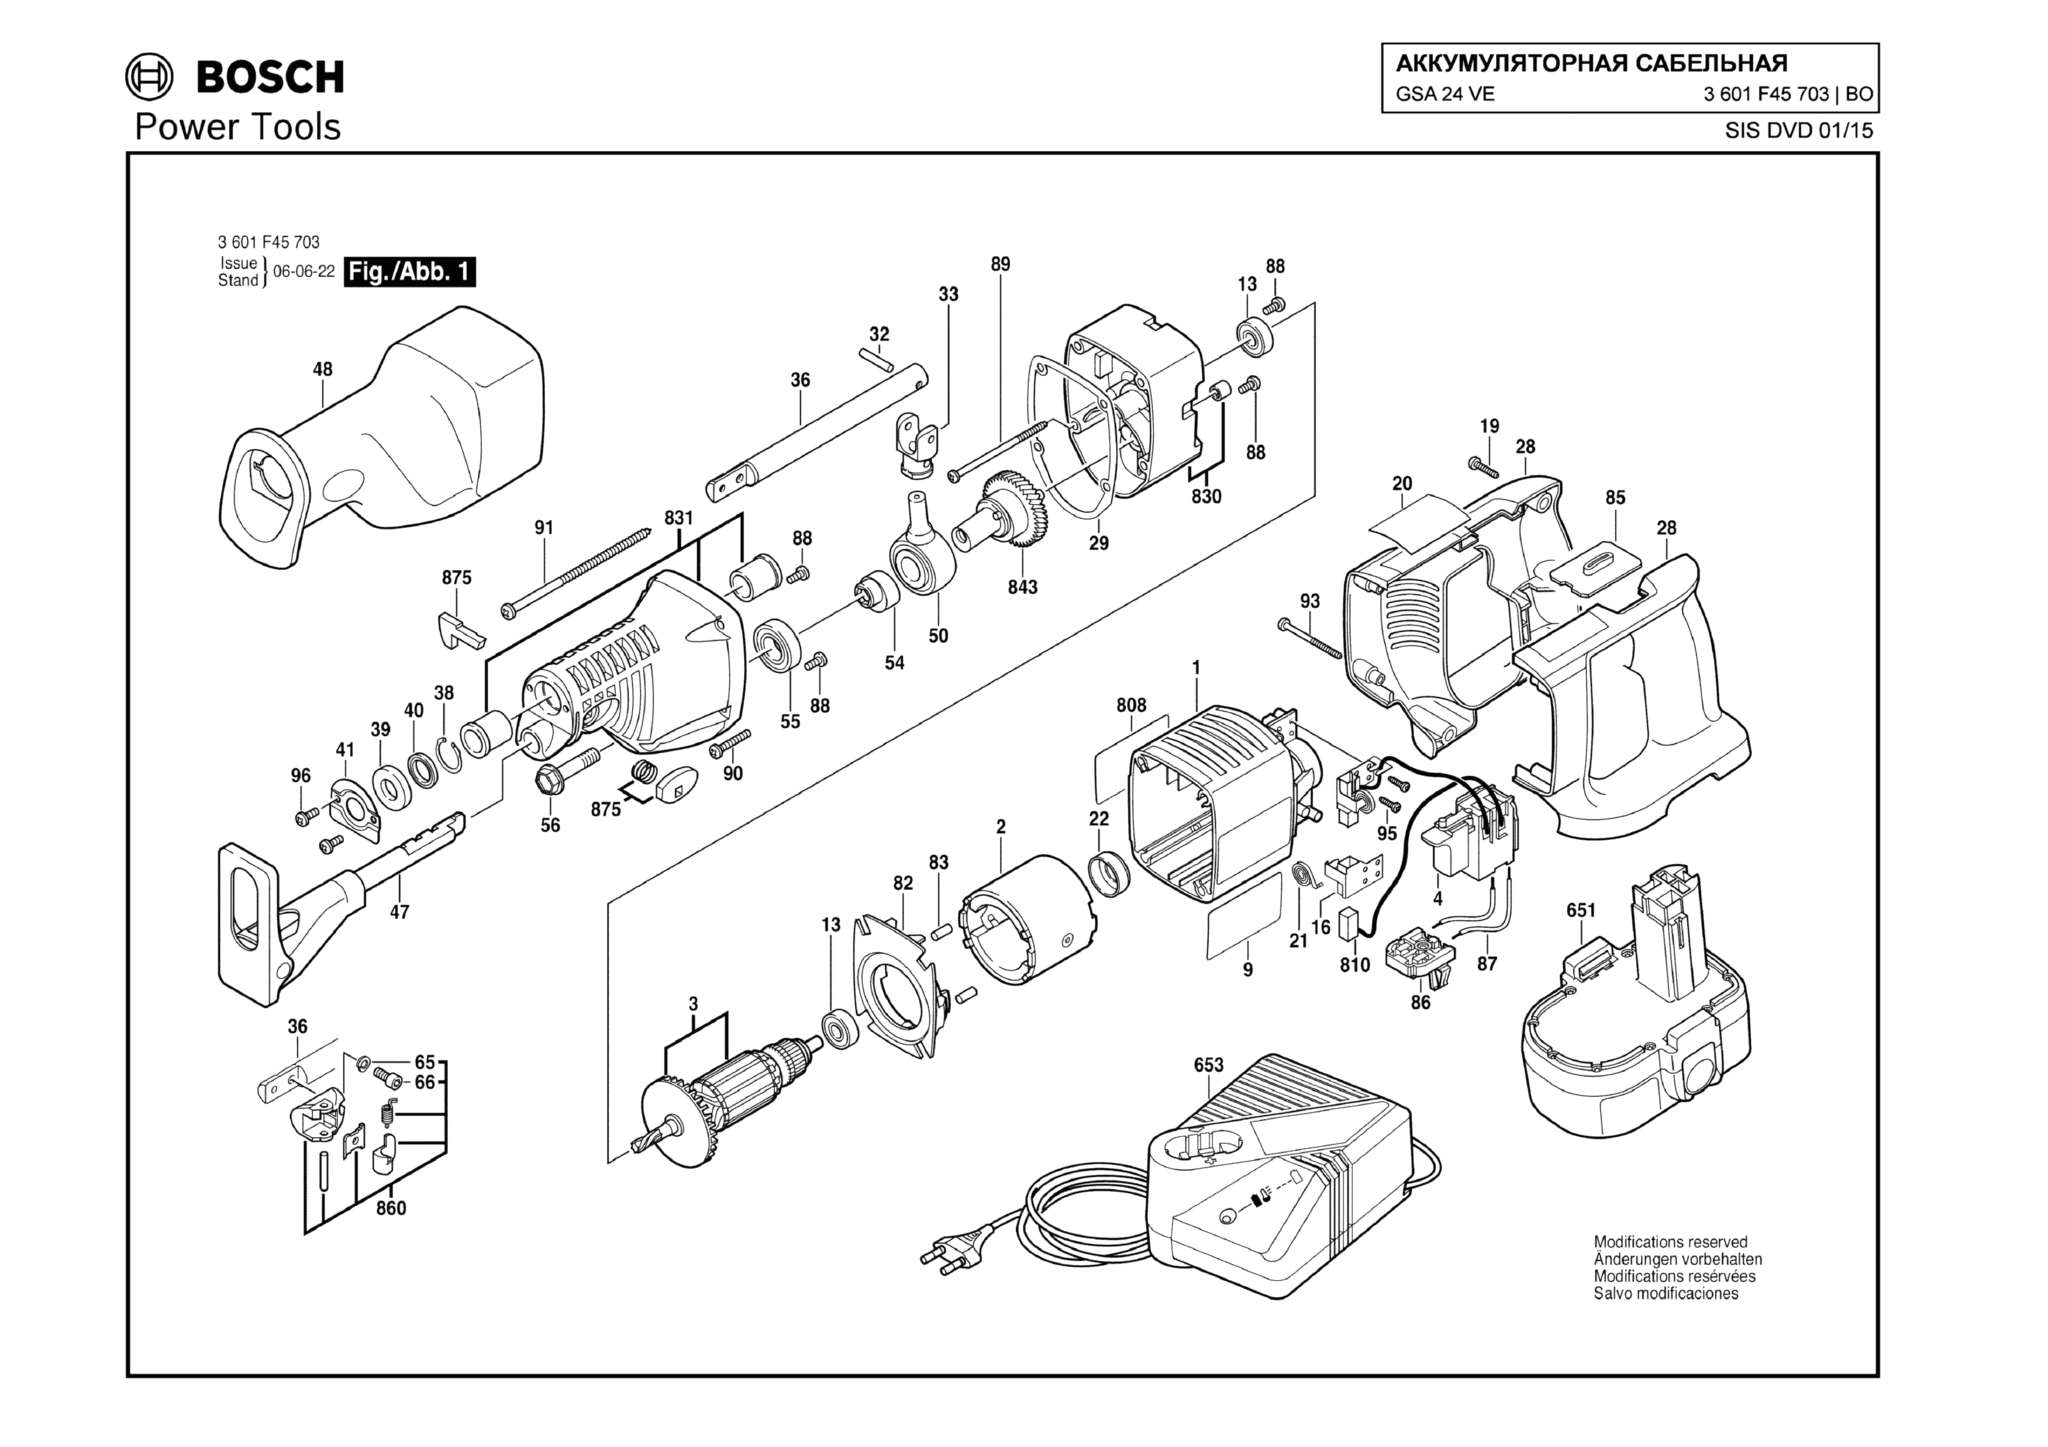 Запчасти, схема и деталировка Bosch GSA 24 VE (ТИП 3601F45703)